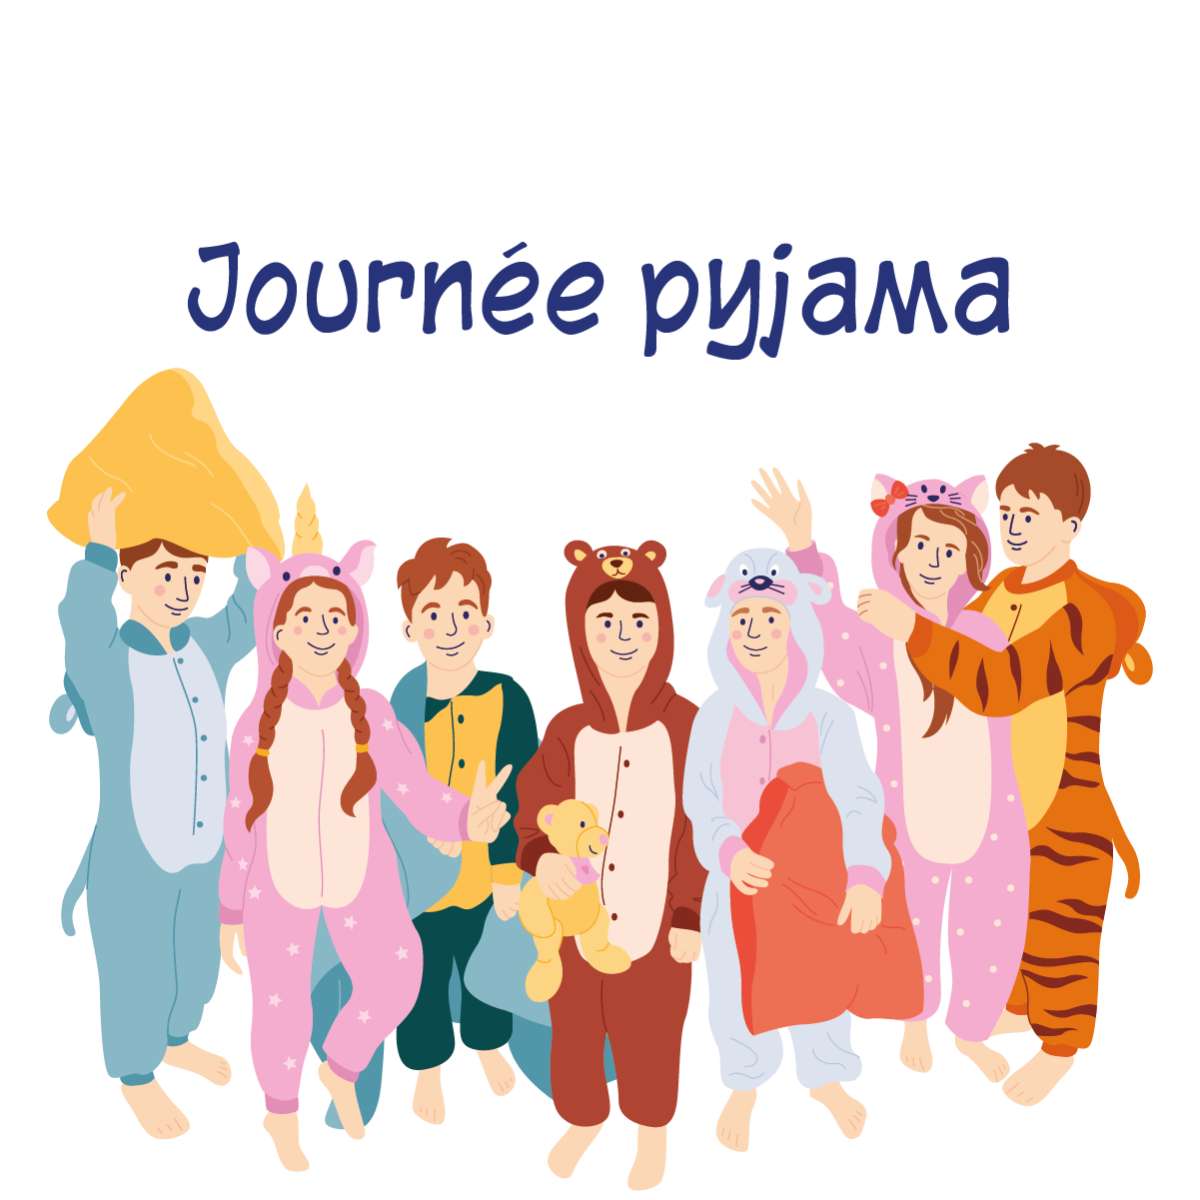 journee pyjama puzzle online from photo